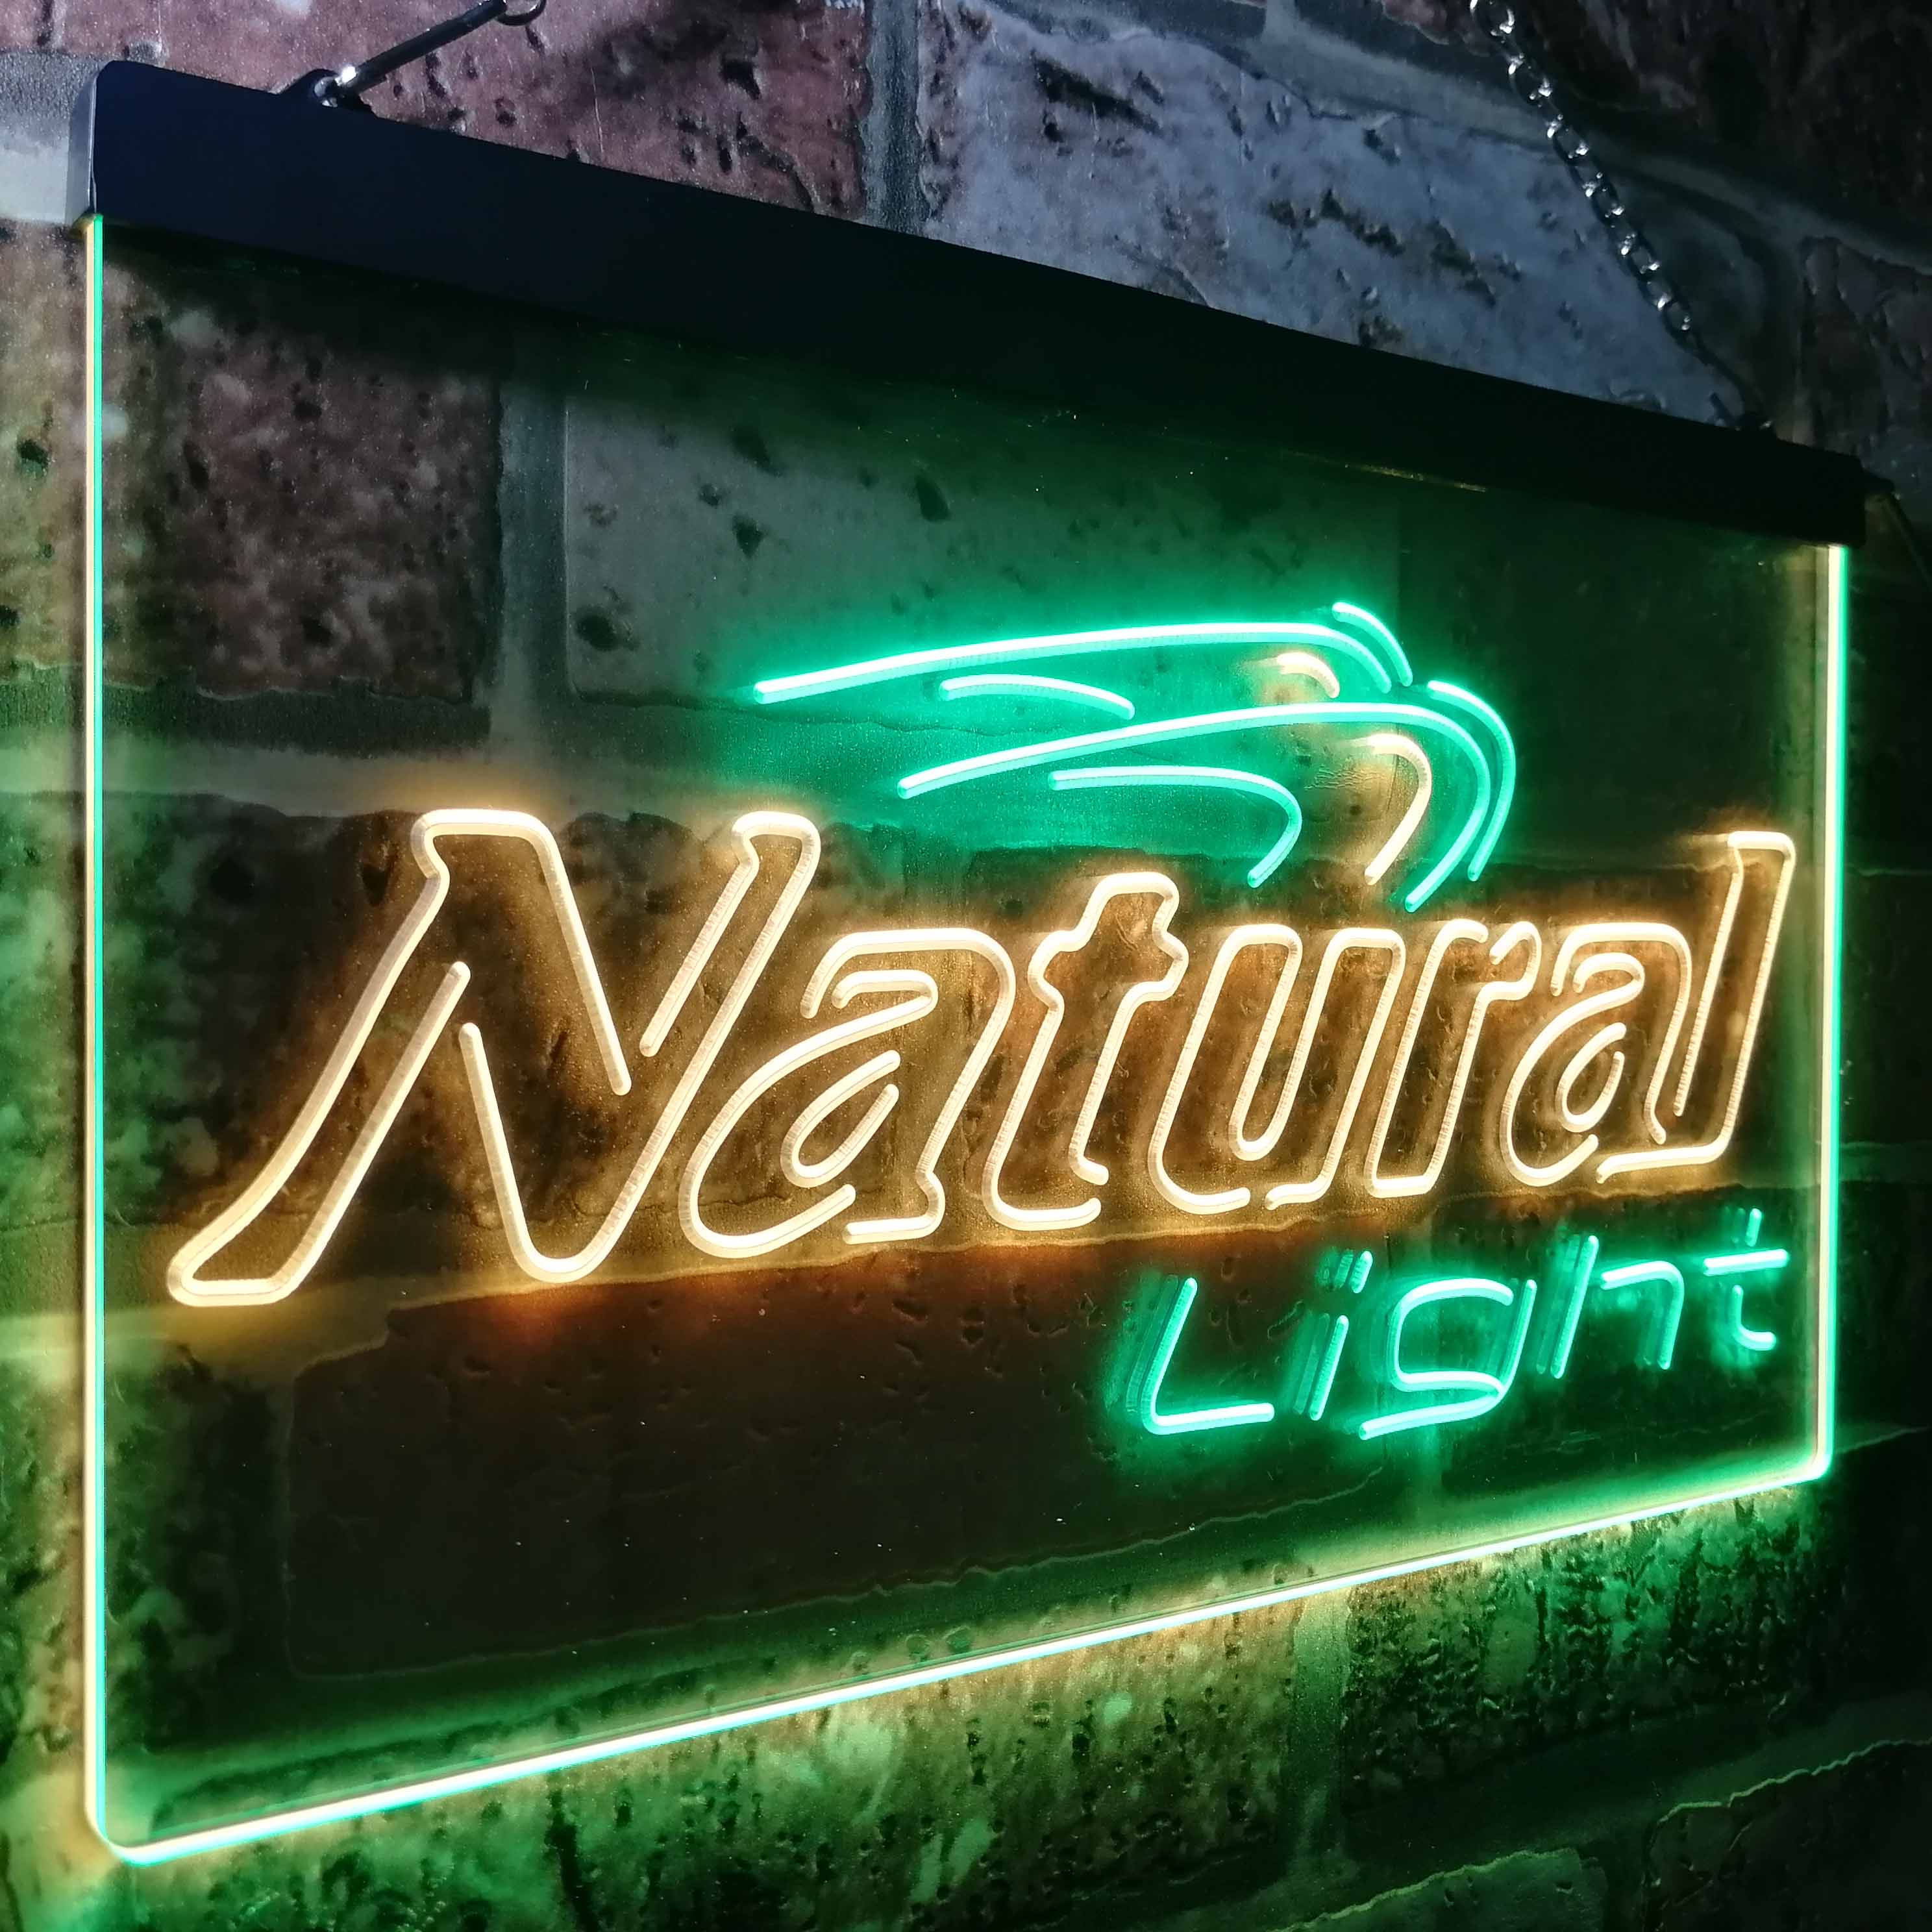 Natural Light Beer Bar Gift Neon LED Sign